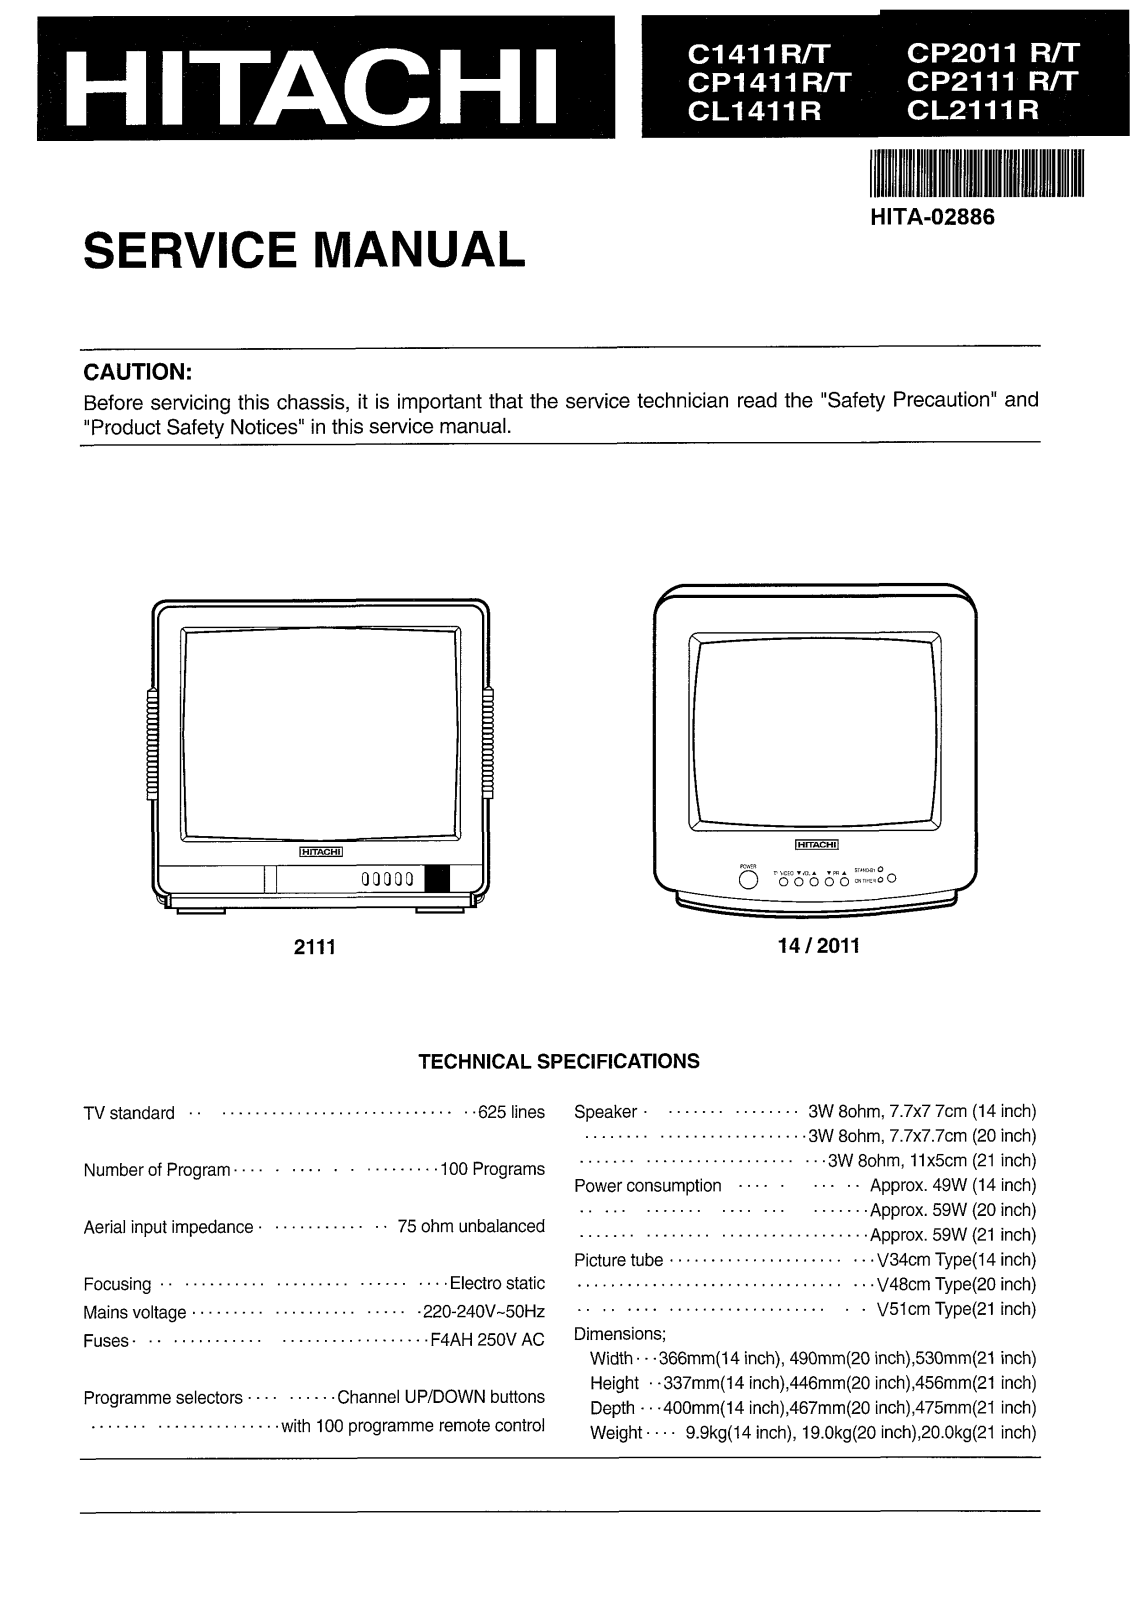 Hitachi C-1411R, C-1411T, CP-1411T, CP-1411R, CL-1411R Service Manual